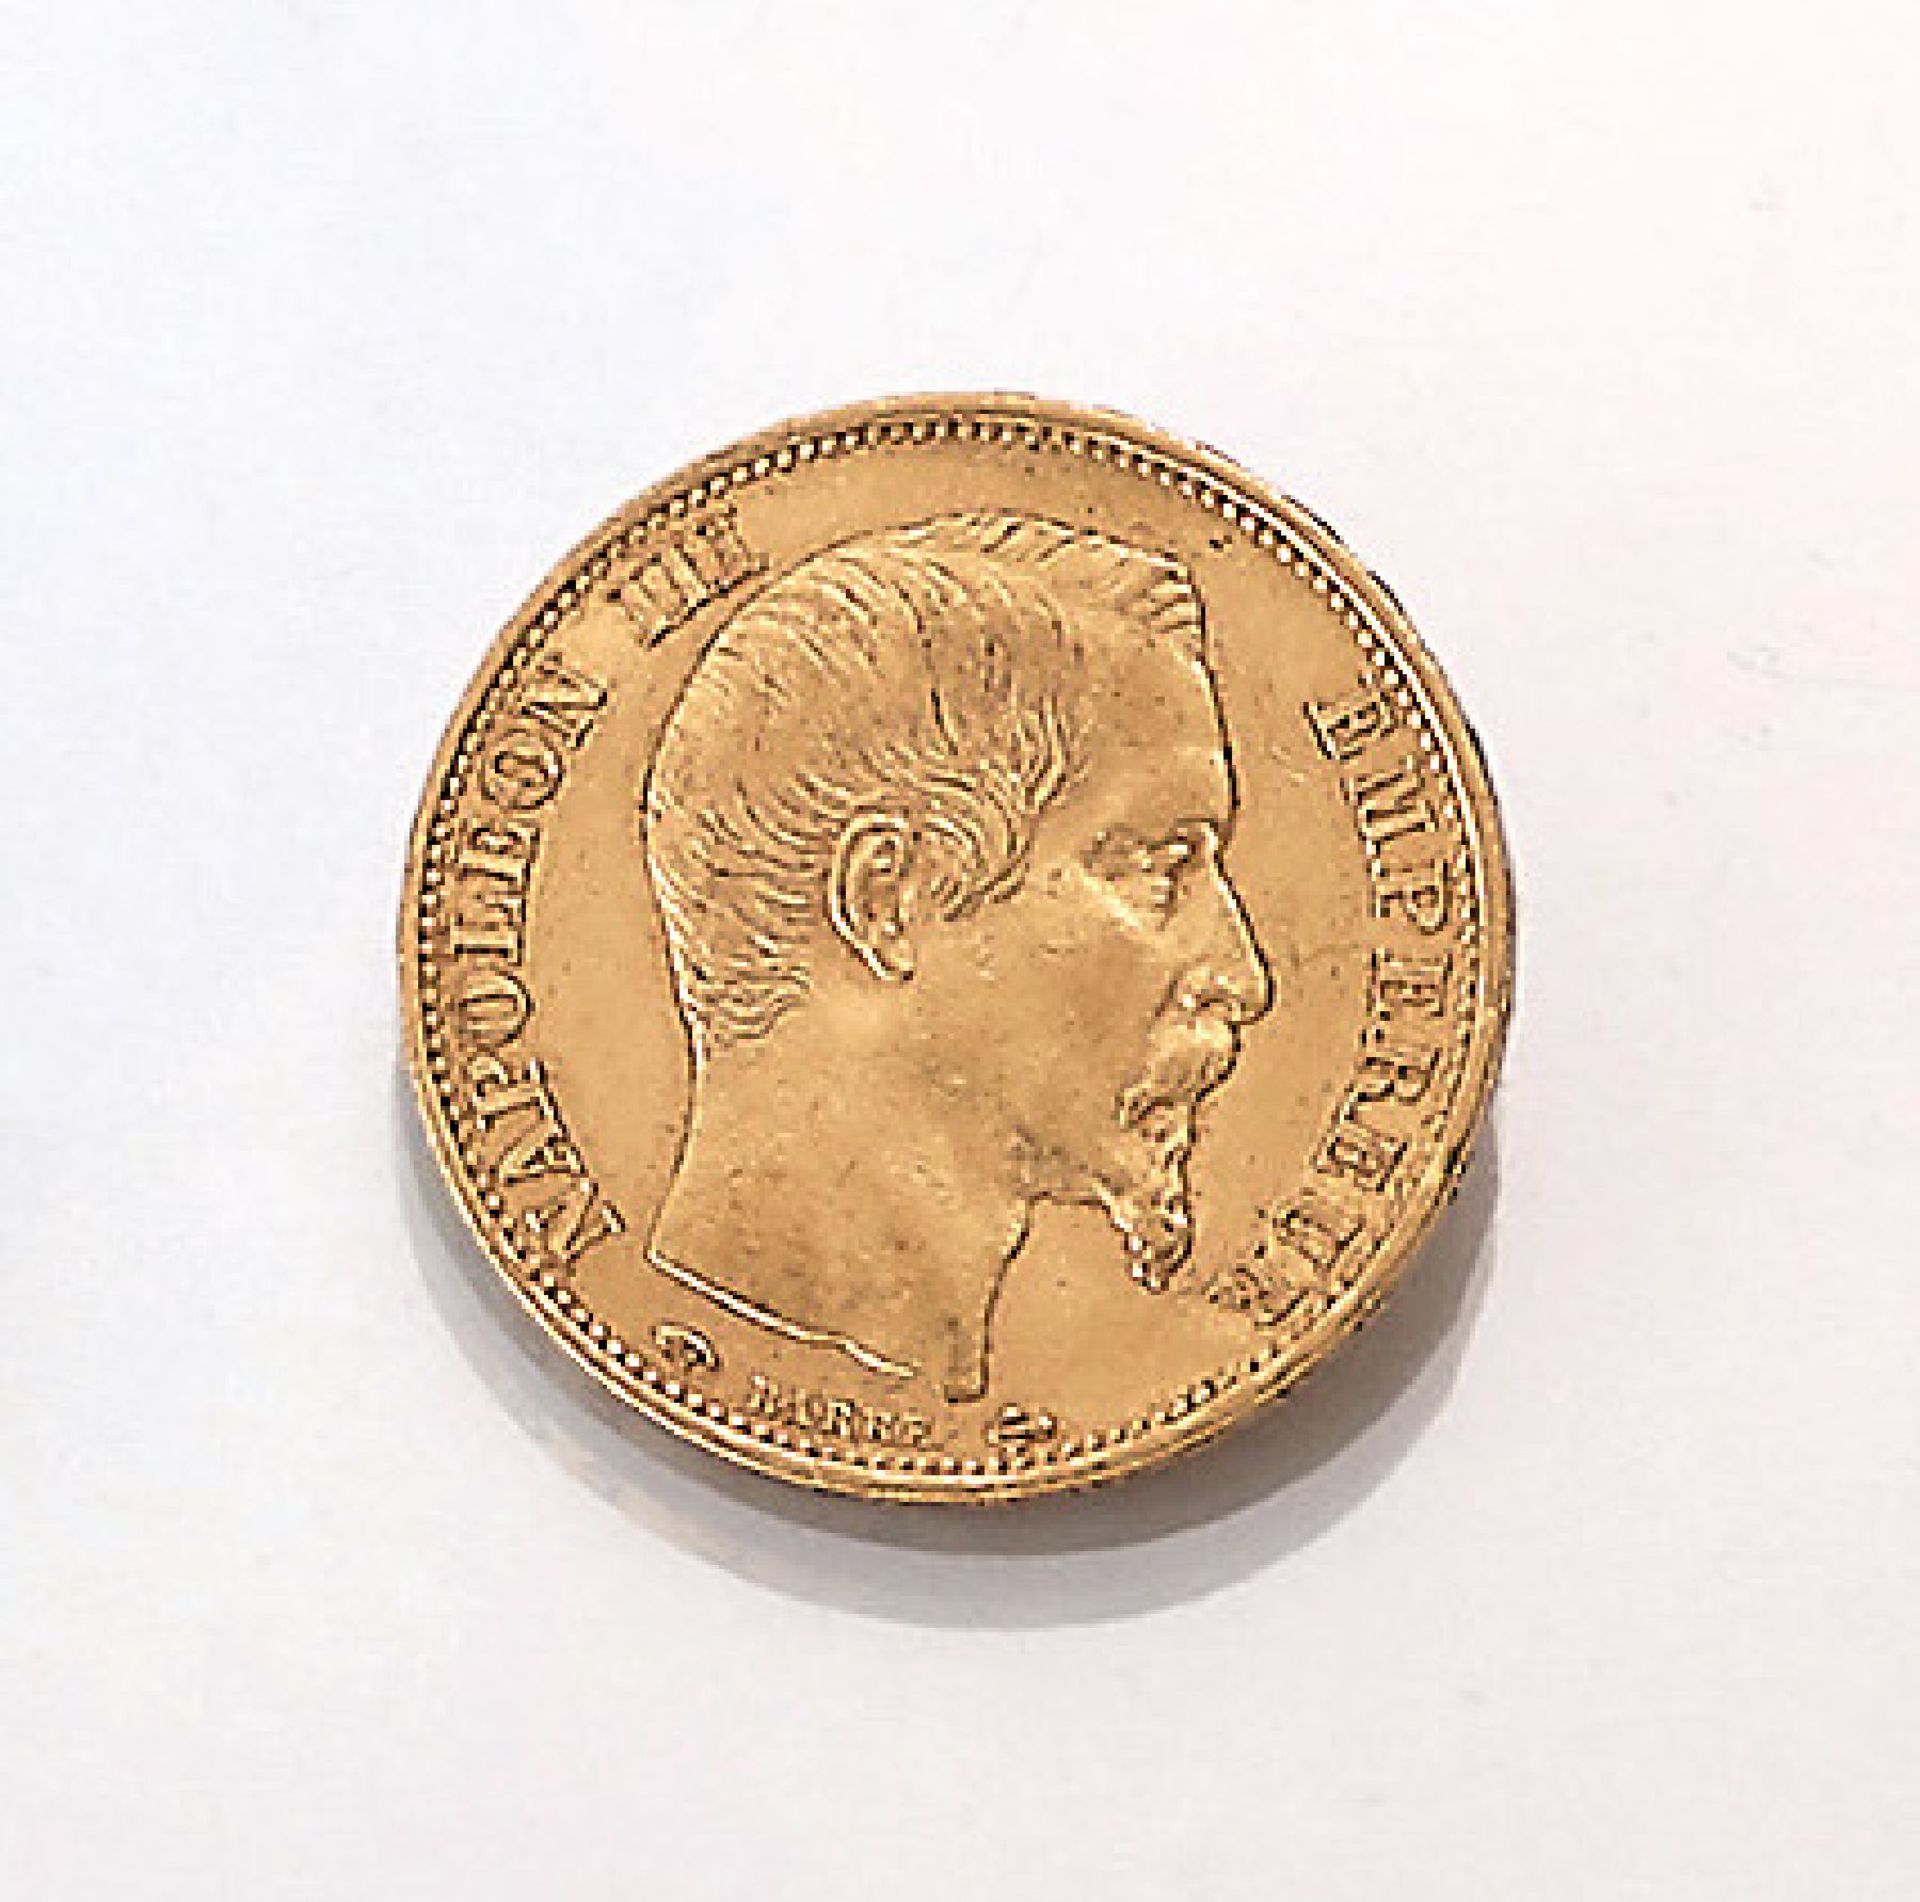 Goldmünze, 20 Francs, Frankreich, 1859, Napoleon III. Empereur, Empire Francais, Prägemarke A,